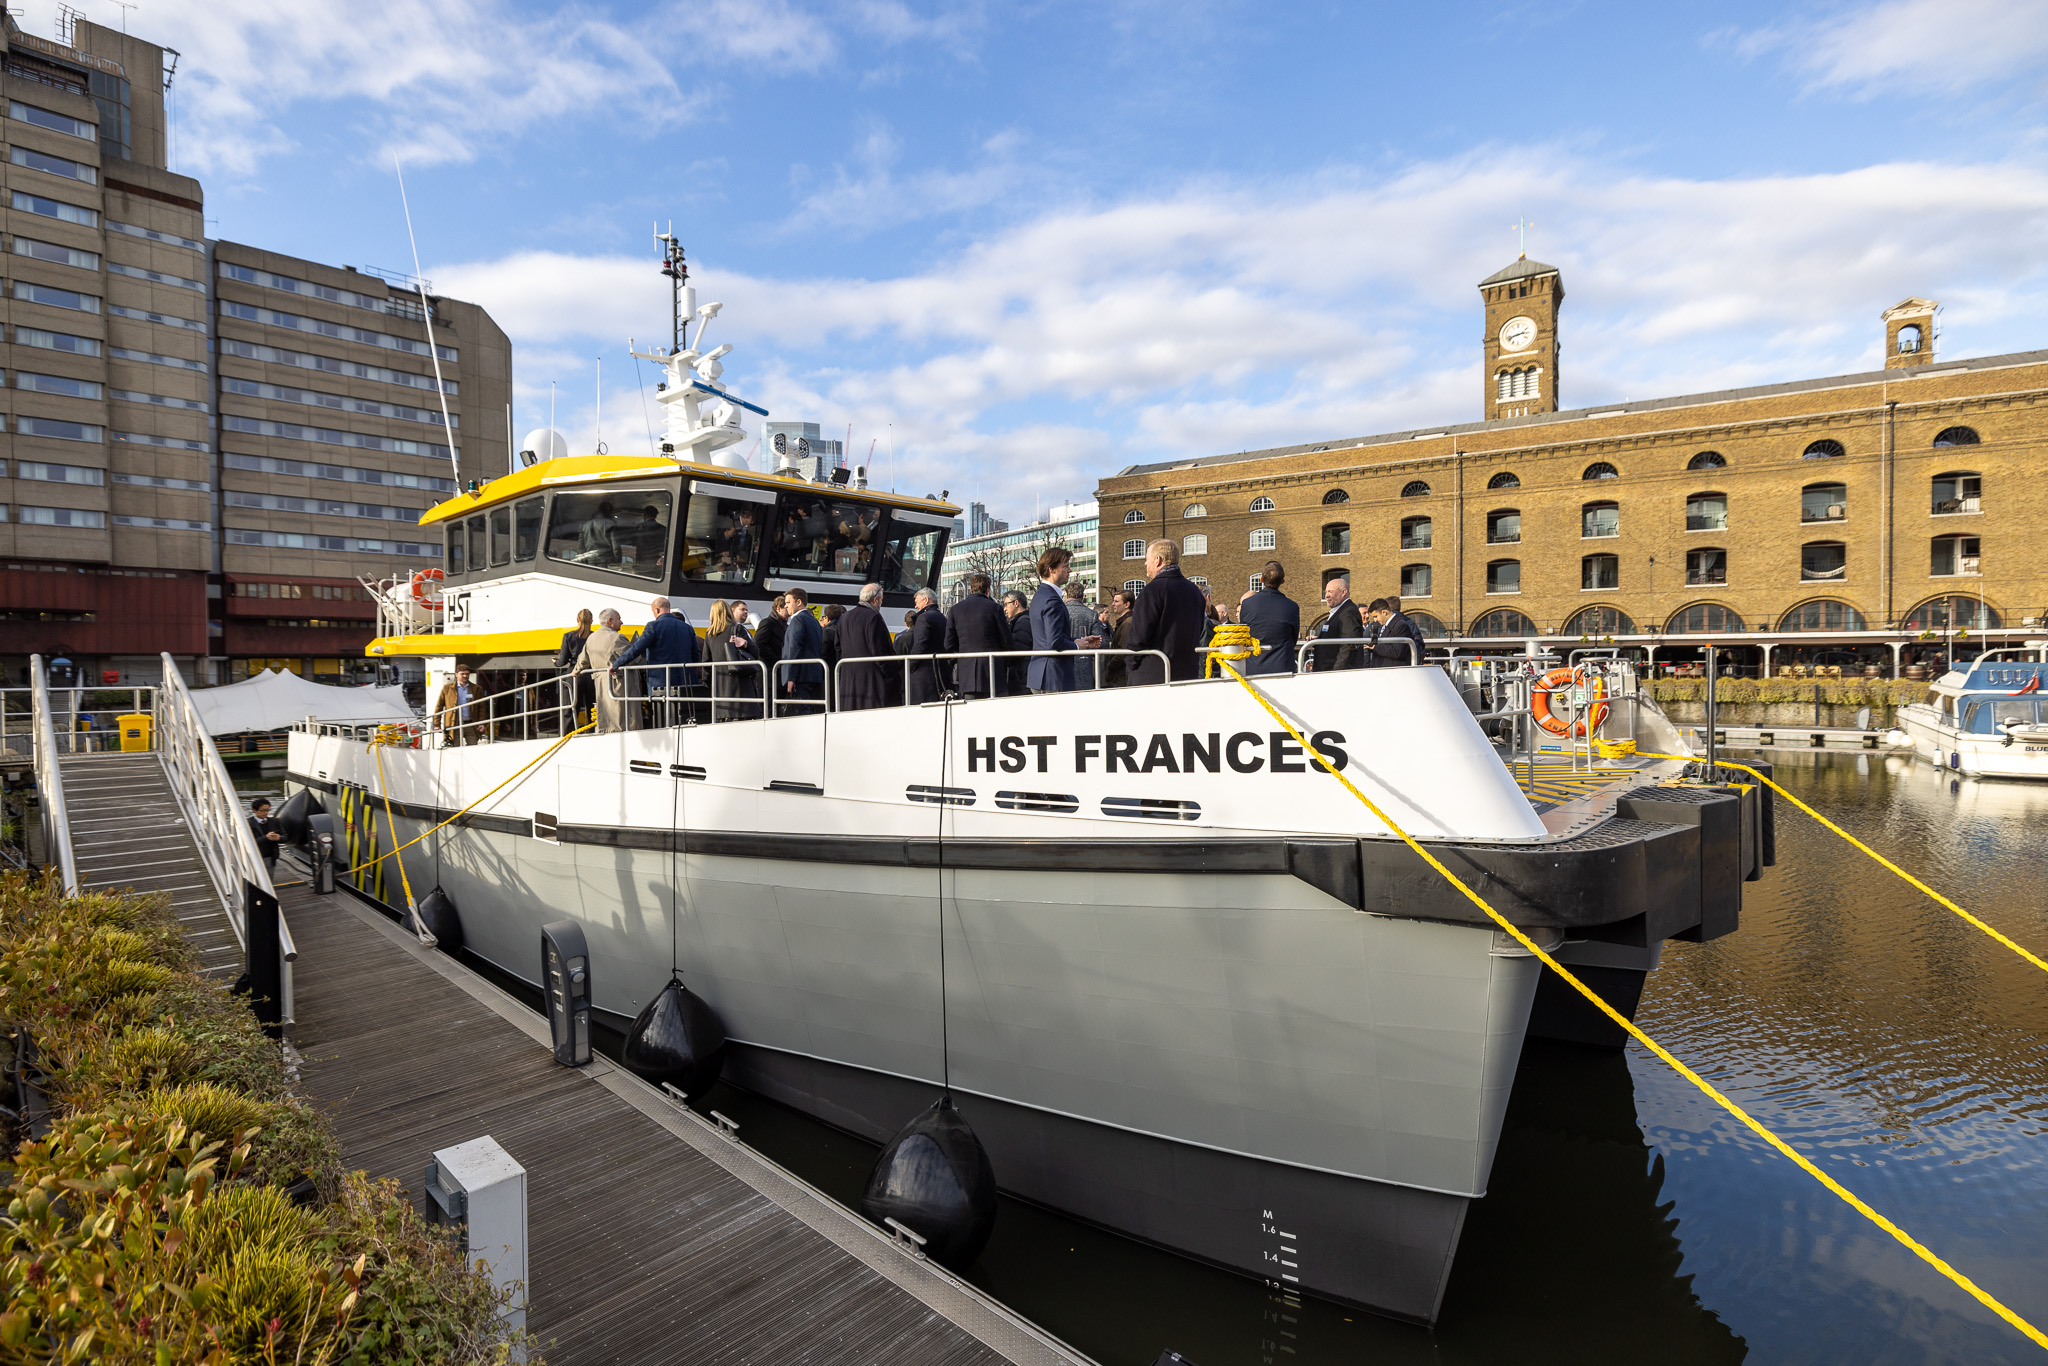 2 HST Frances docked at St Katharine Docks London